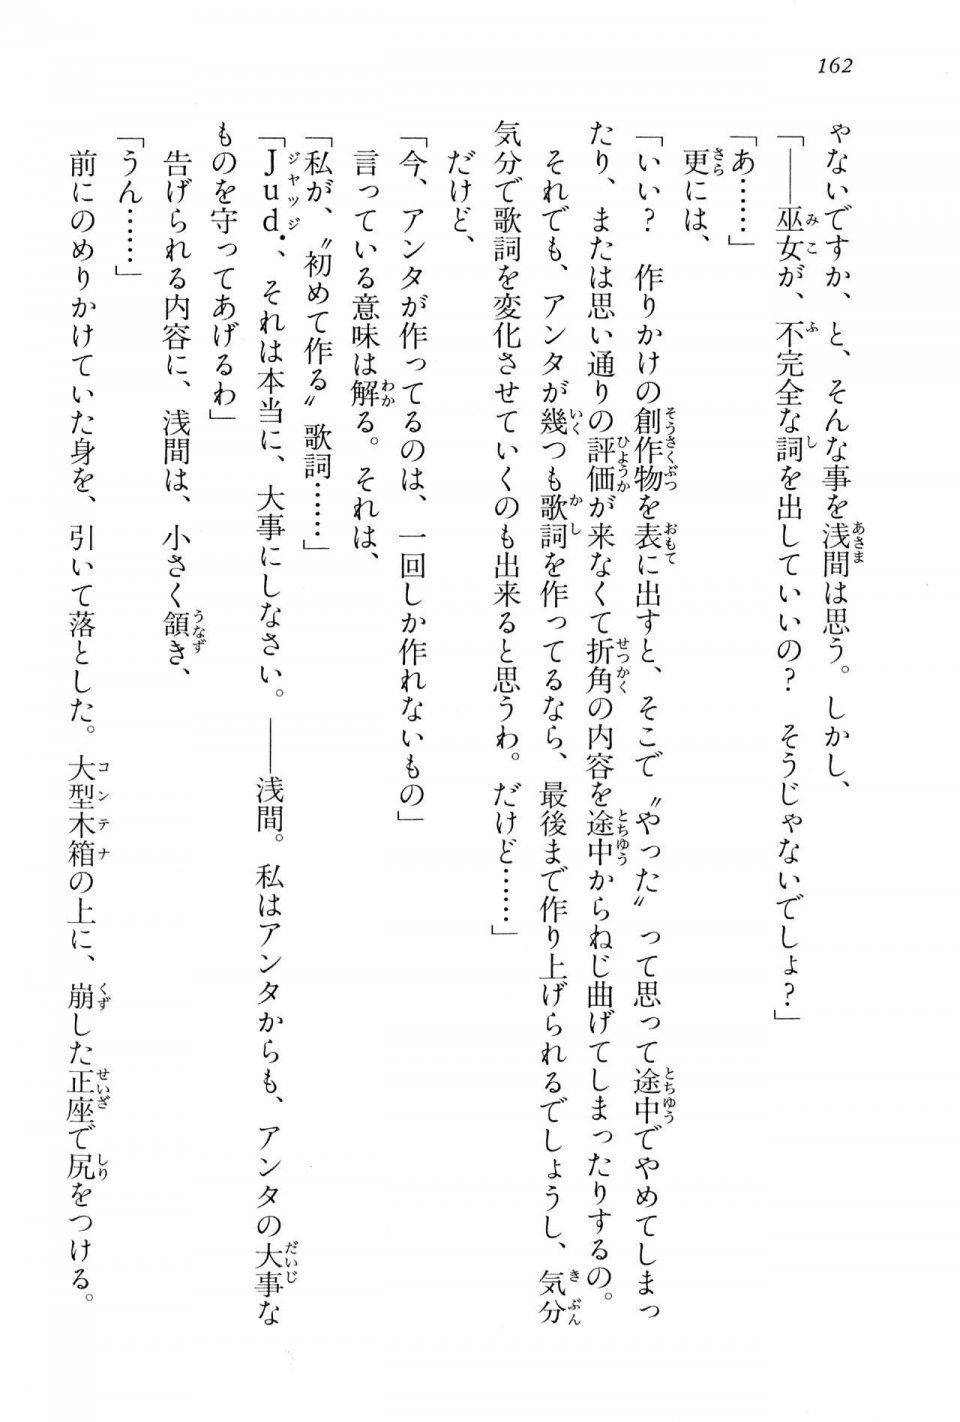 Kyoukai Senjou no Horizon BD Special Mininovel Vol 2(1B) - Photo #166